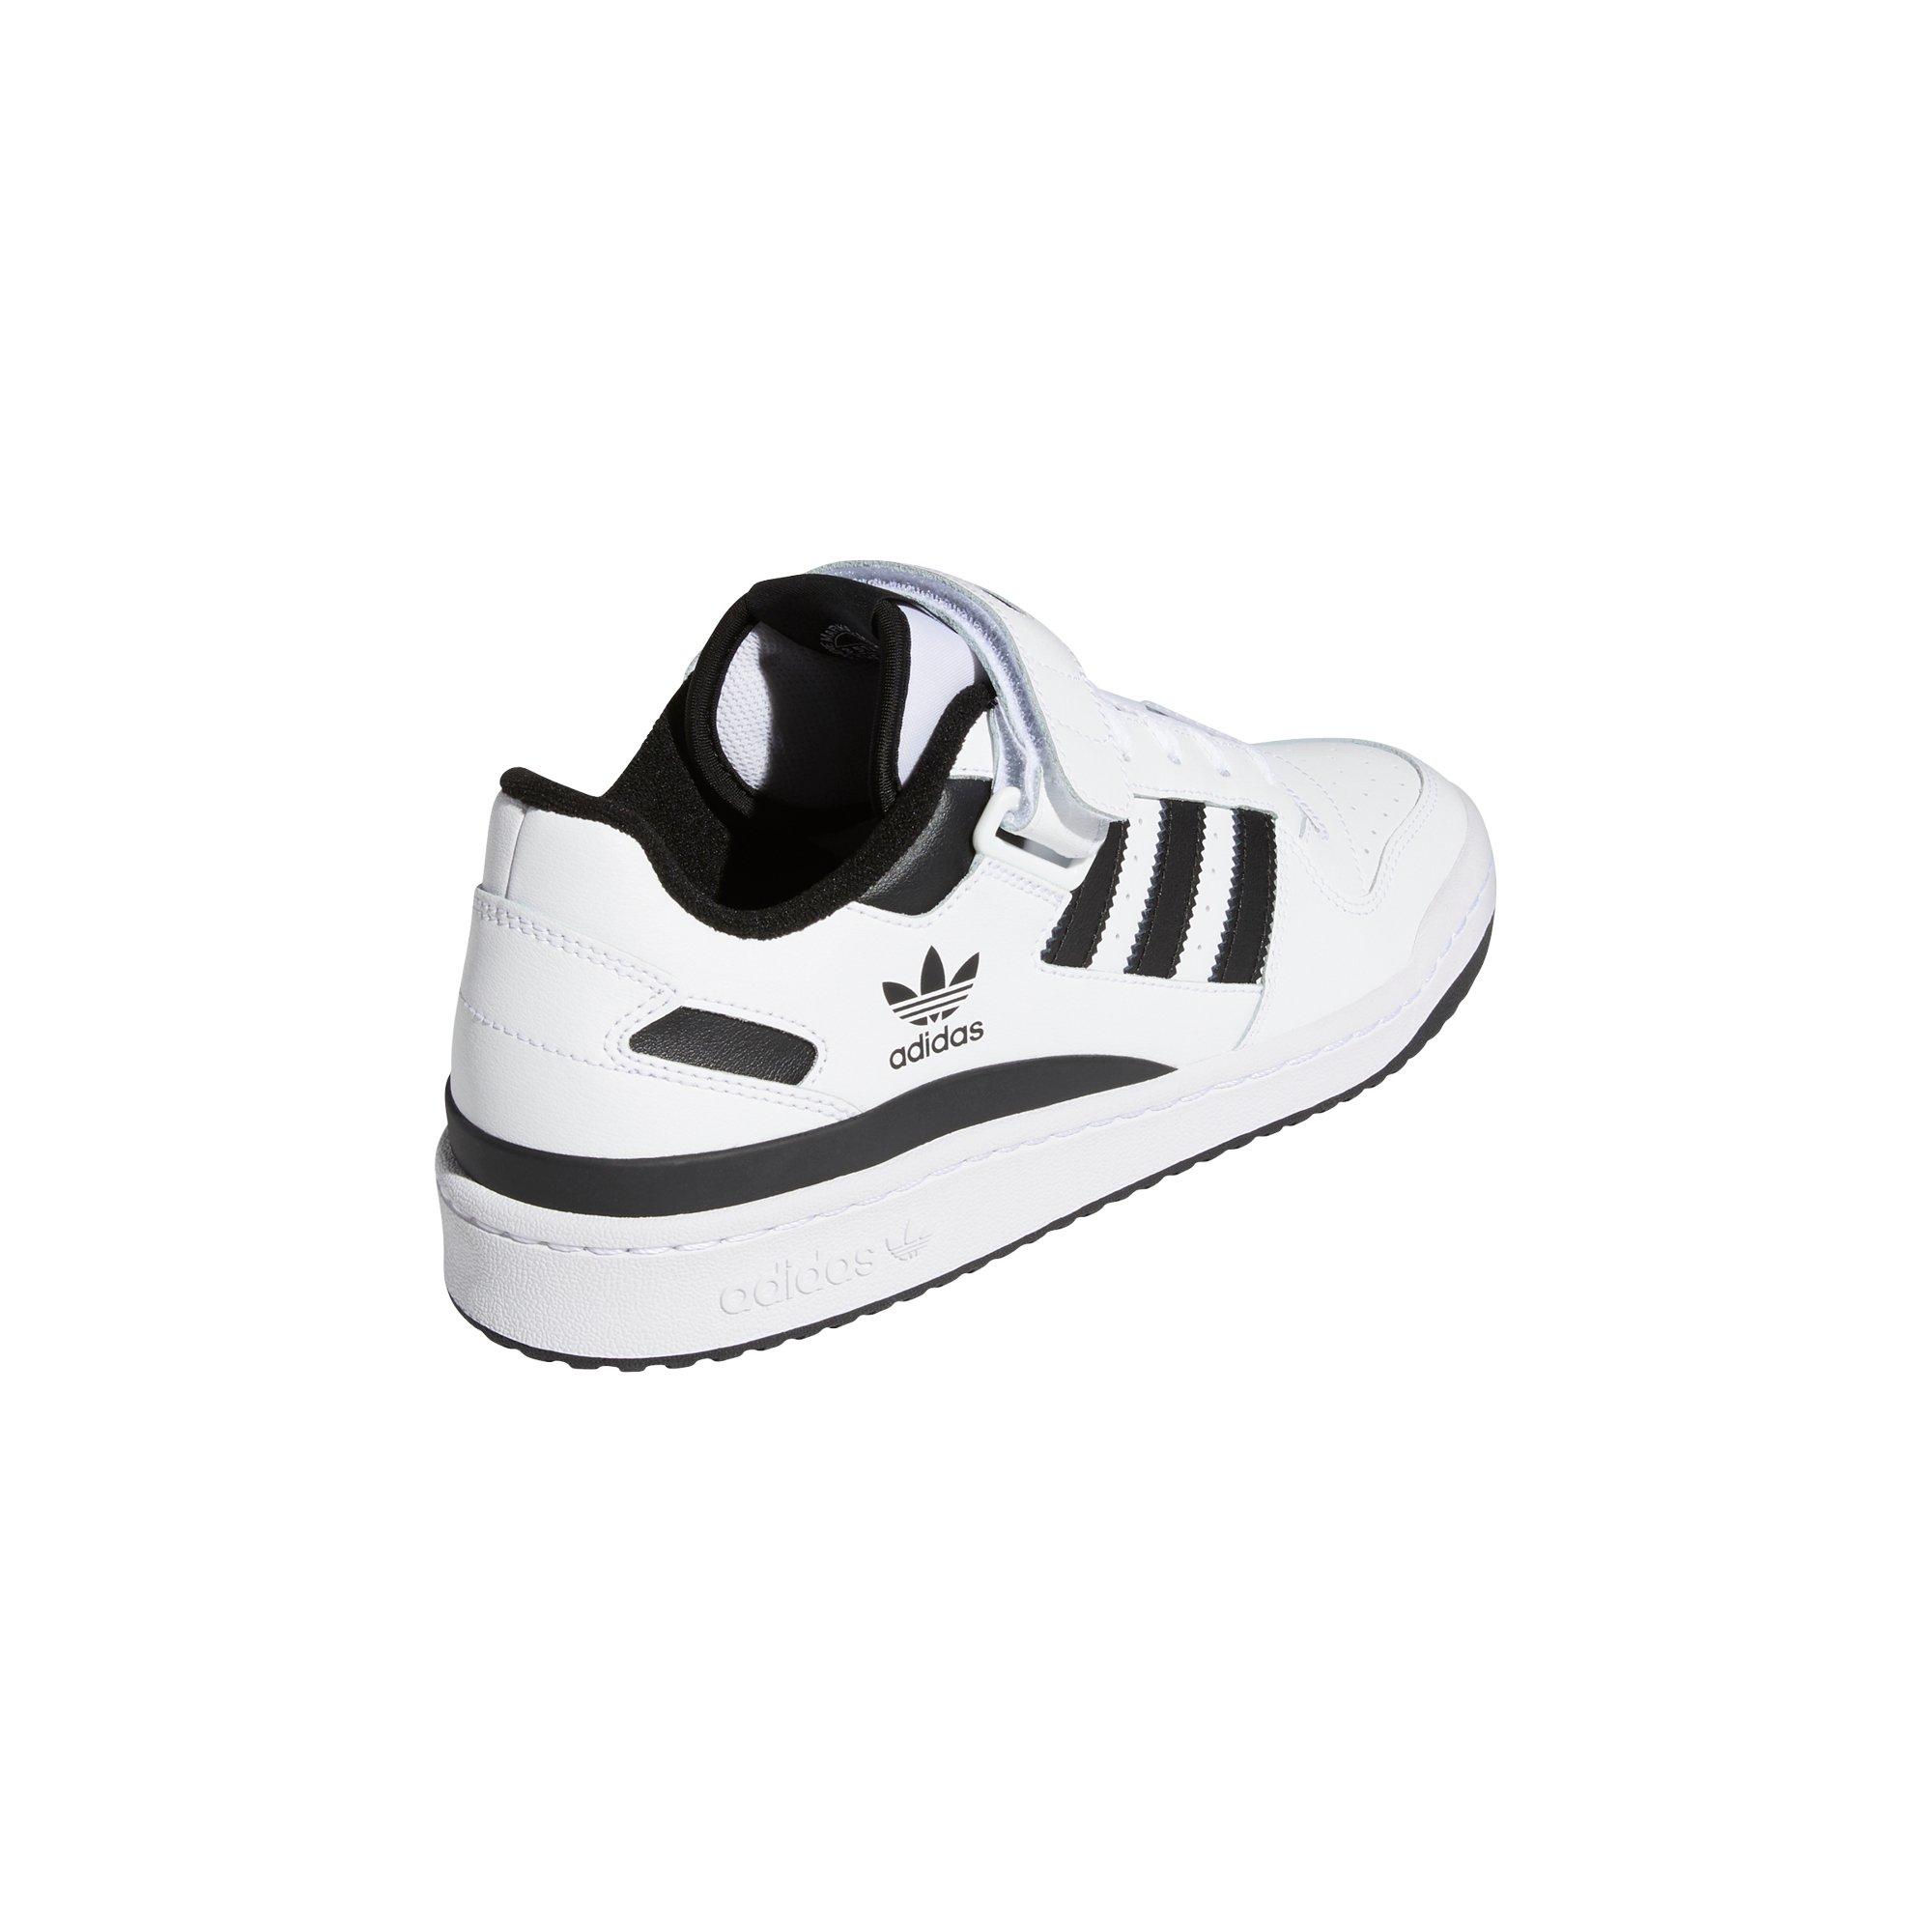 Men's Adidas White/Black Louisville Cardinals Forum Low Basketball Shoes